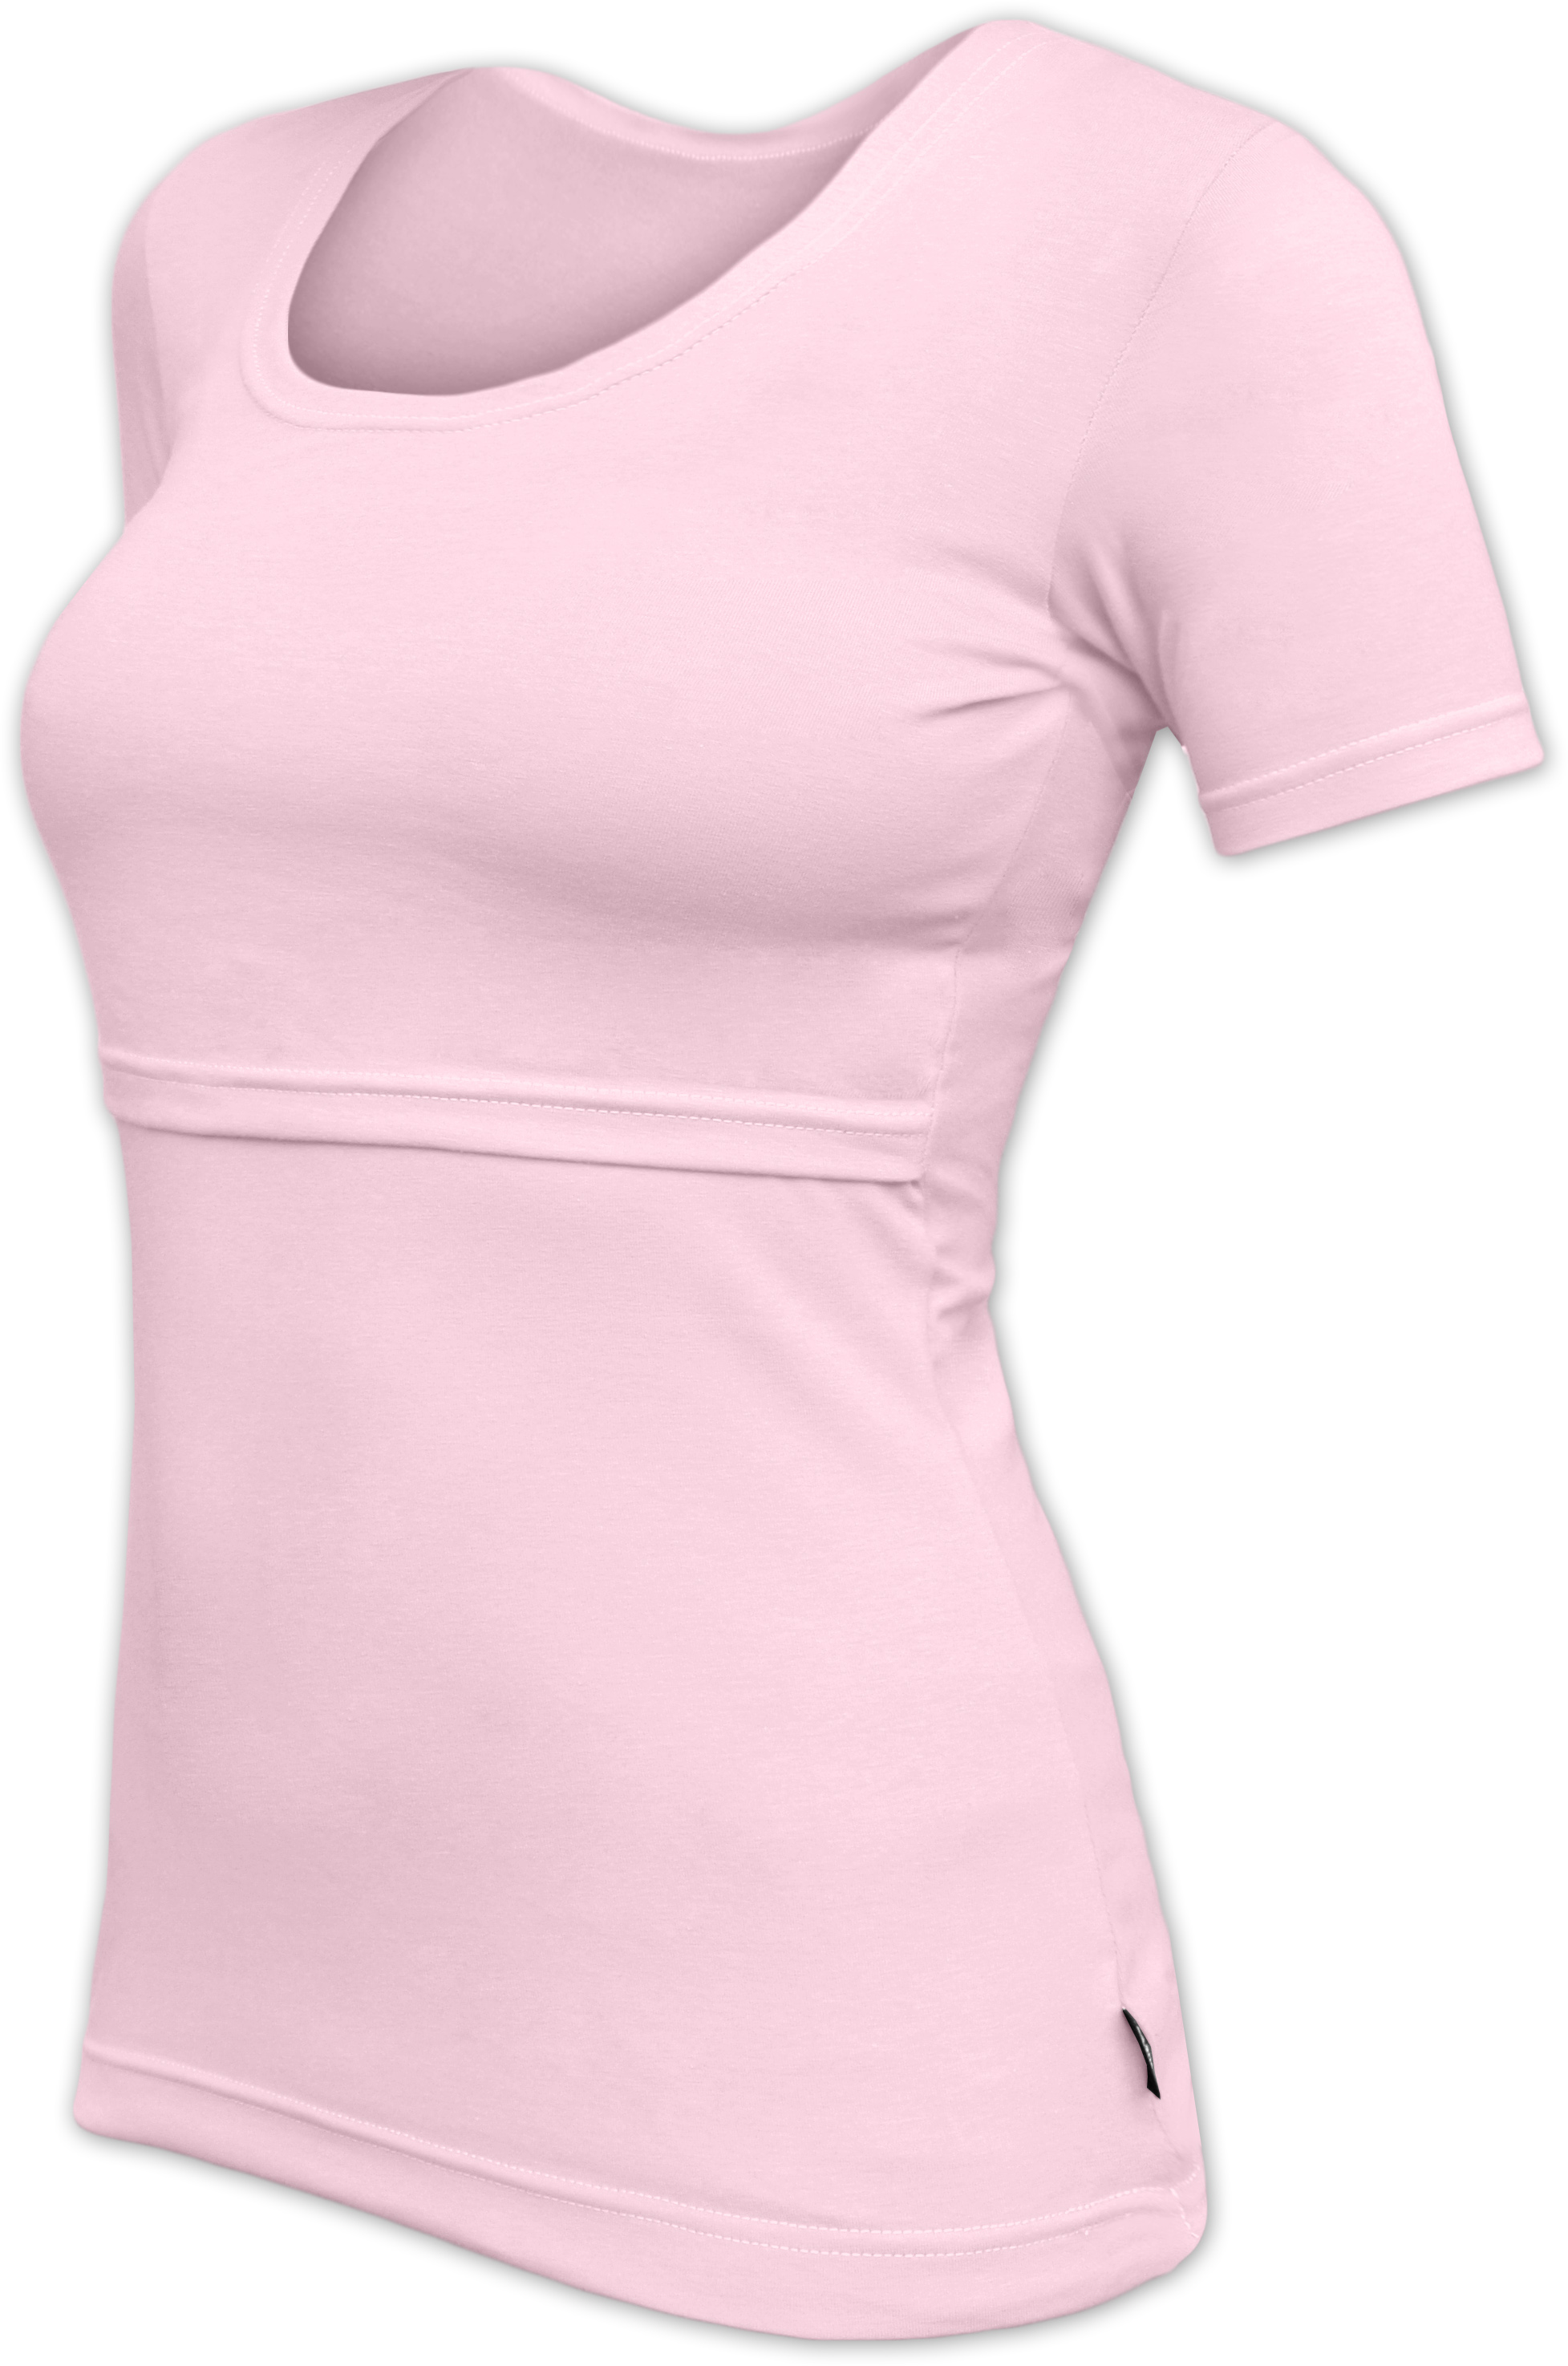 KATERINA- breast-feeding T-shirt 04, short sleeves, LIGHT PINK S/M